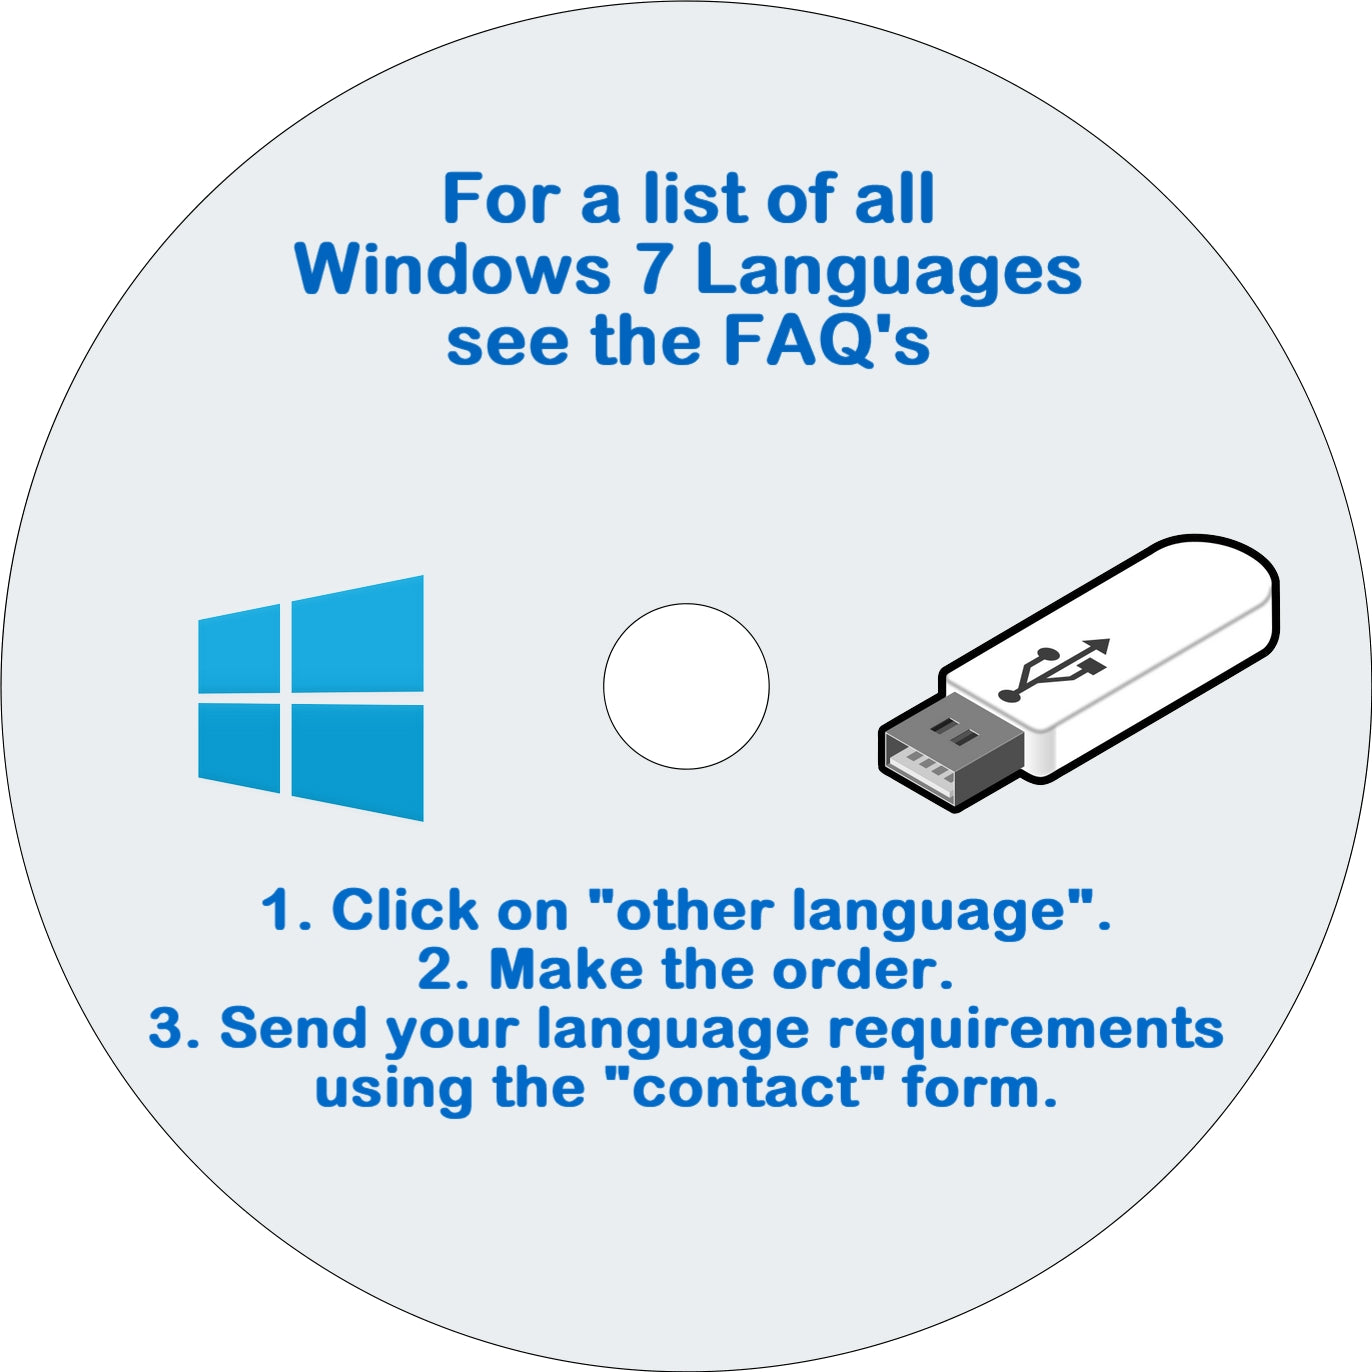 Windows 7 Enterprise Disk + USB 32 Bit